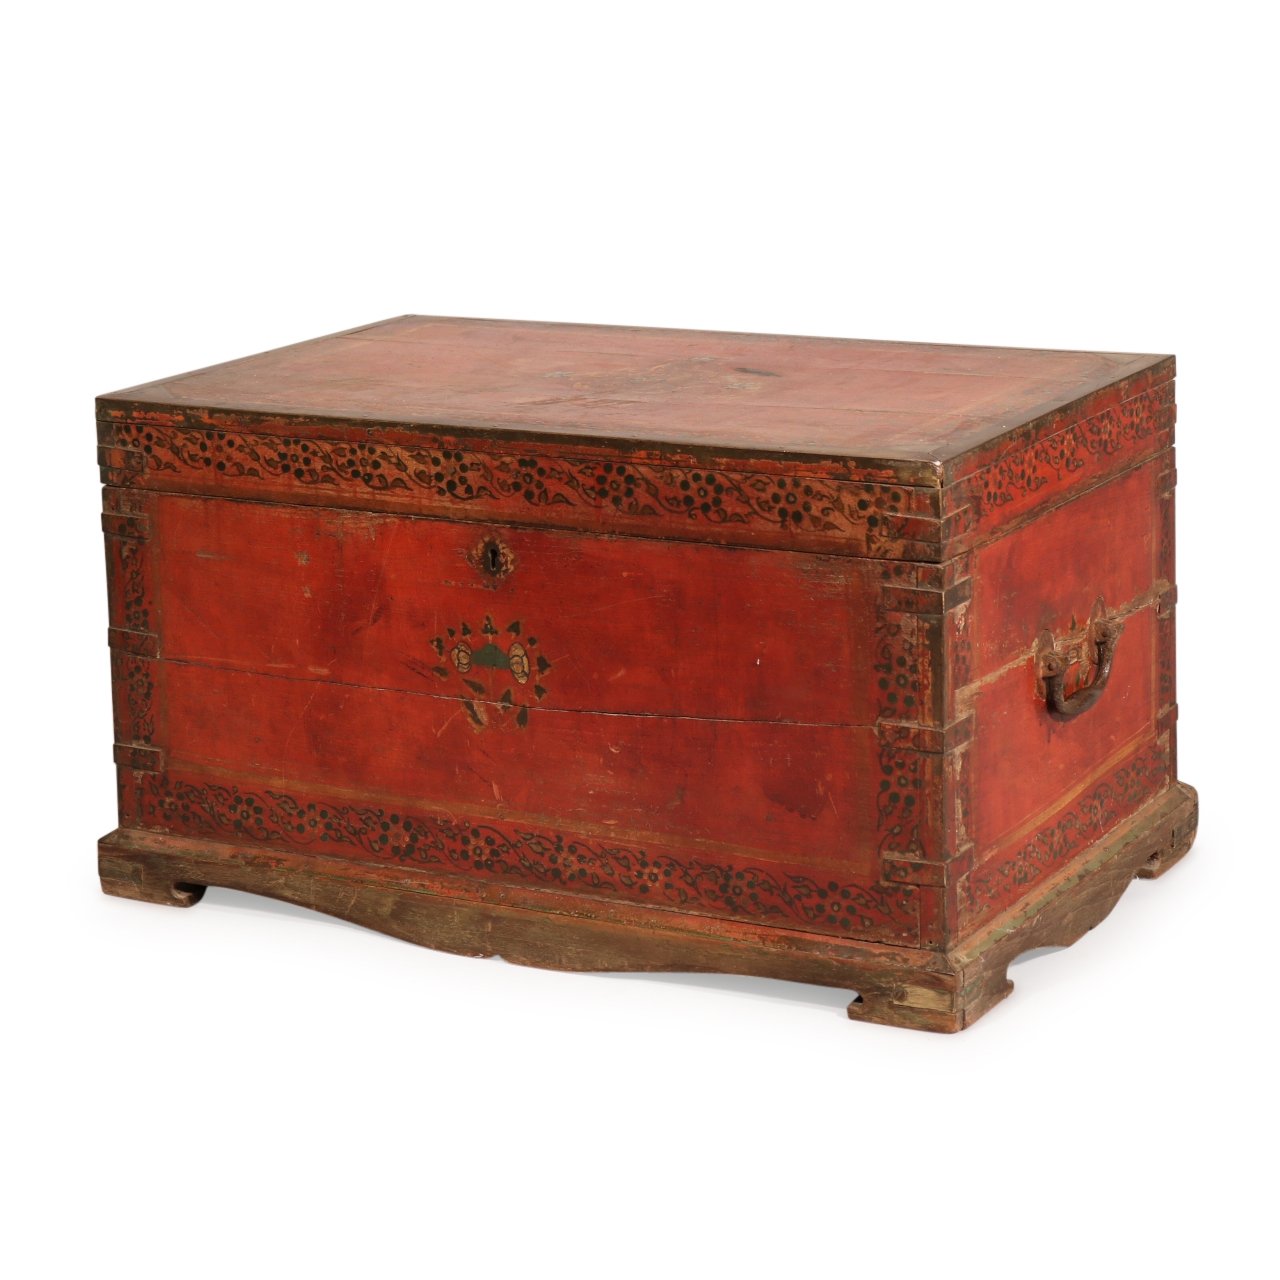 Painted Teak Jewellery Box from Rajasthan -19thC | Indigo Oriental Antiques